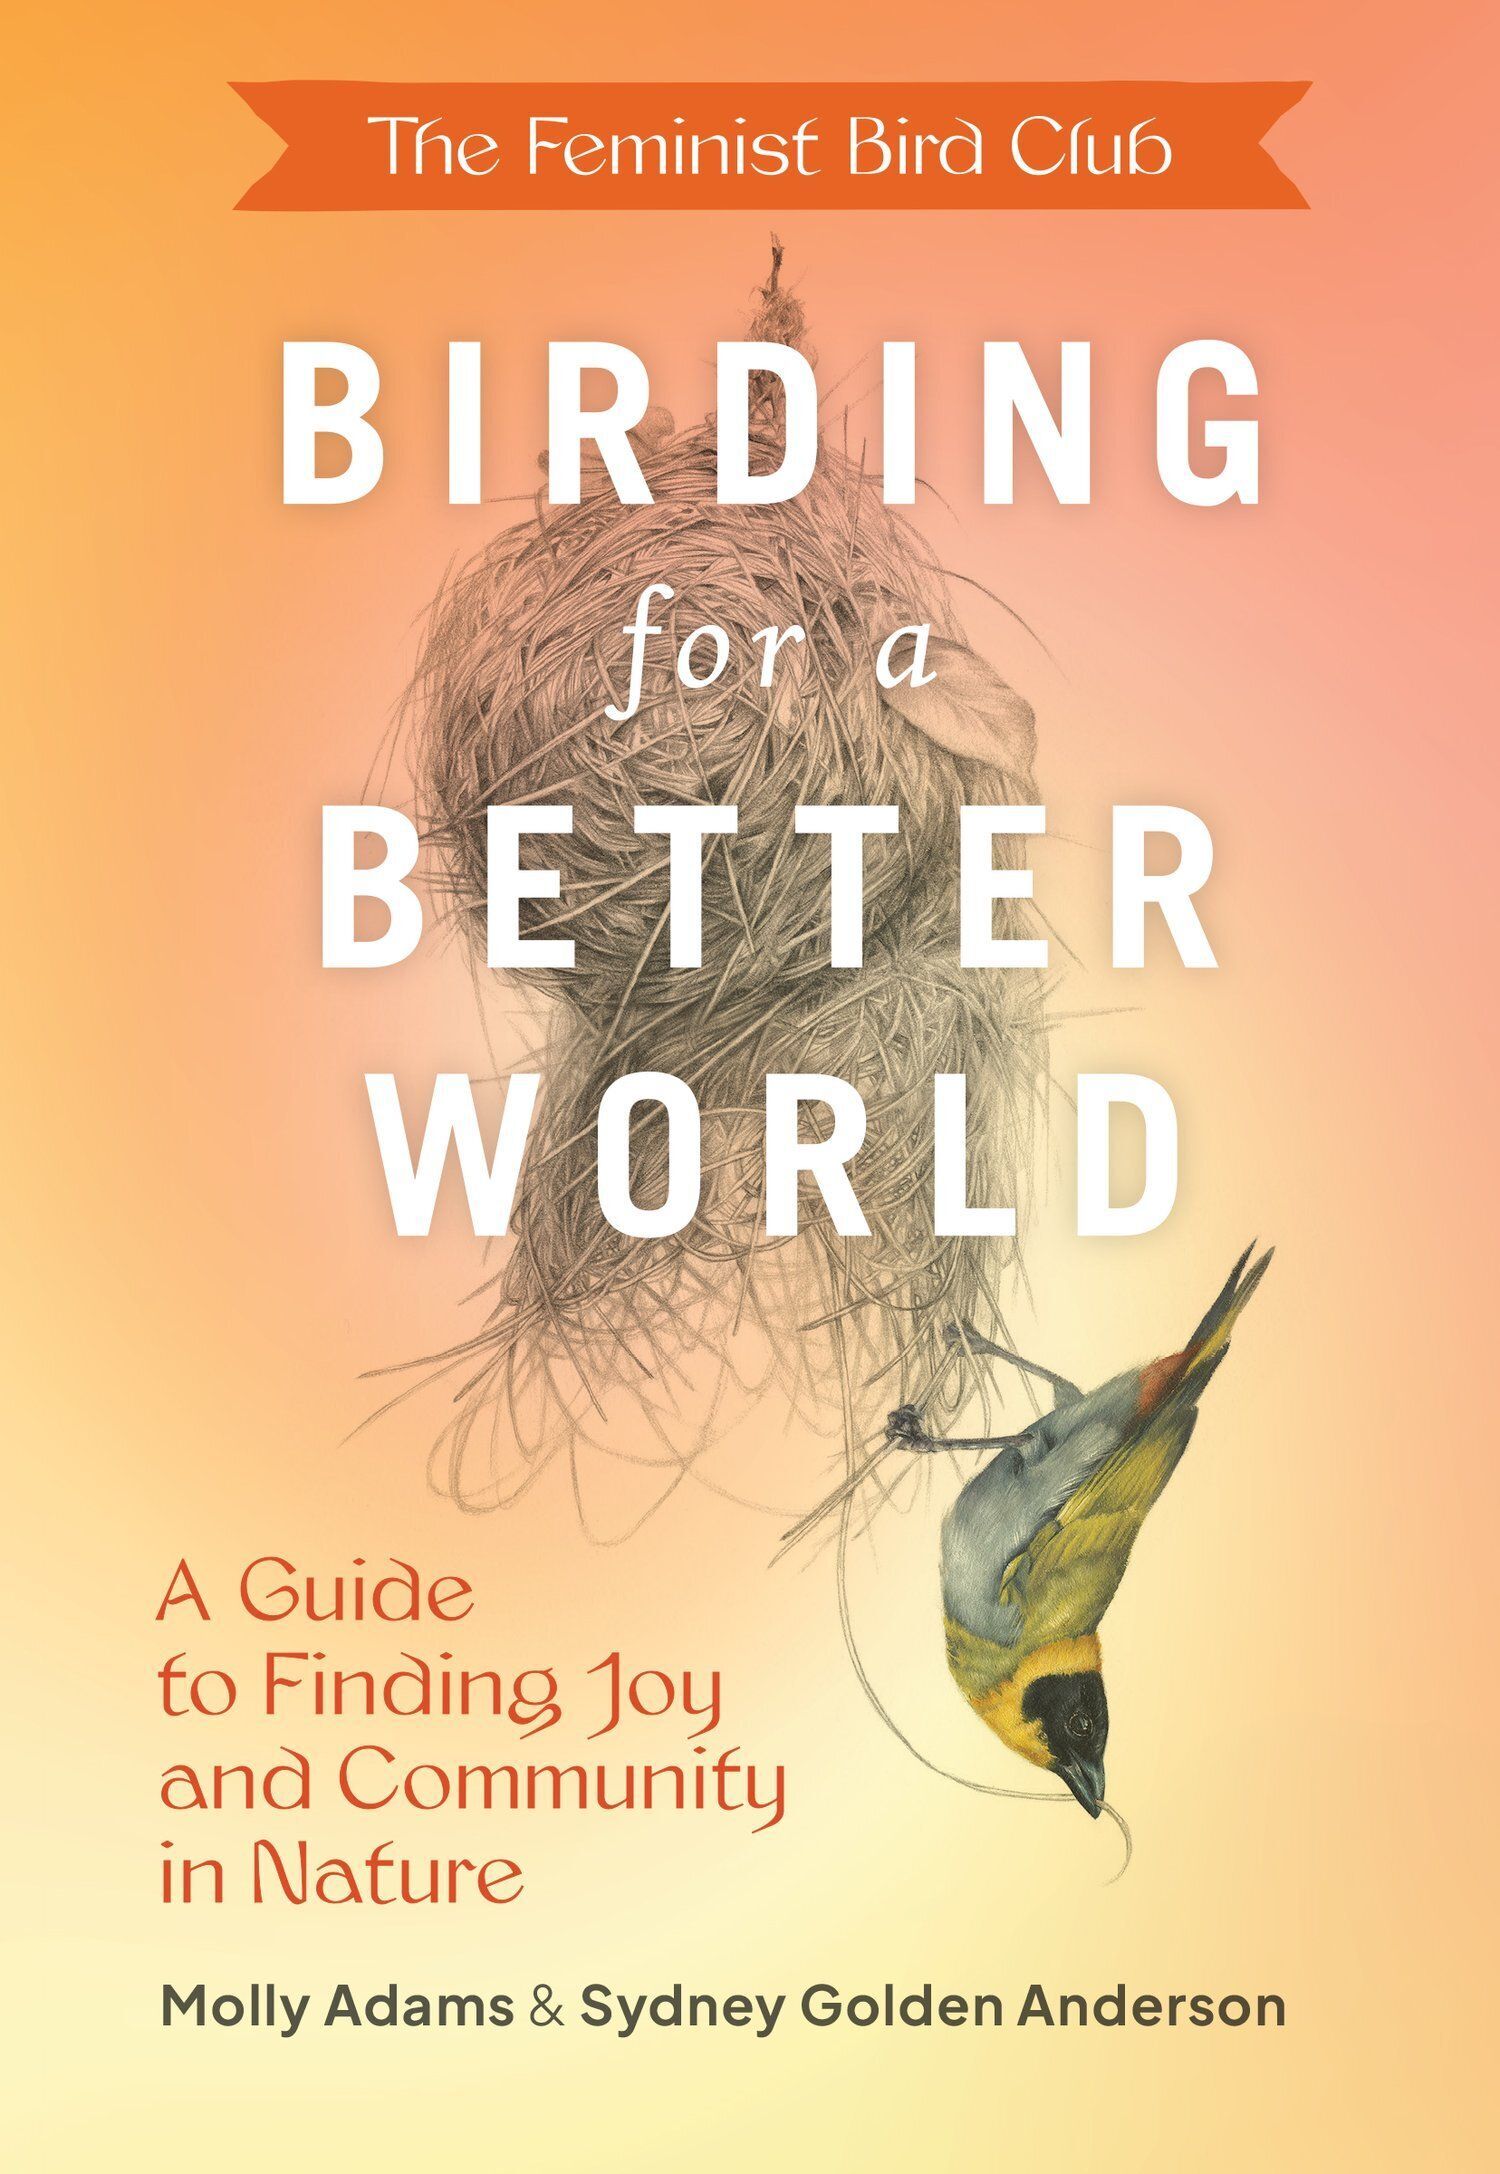 Book review: Birding for a Better World